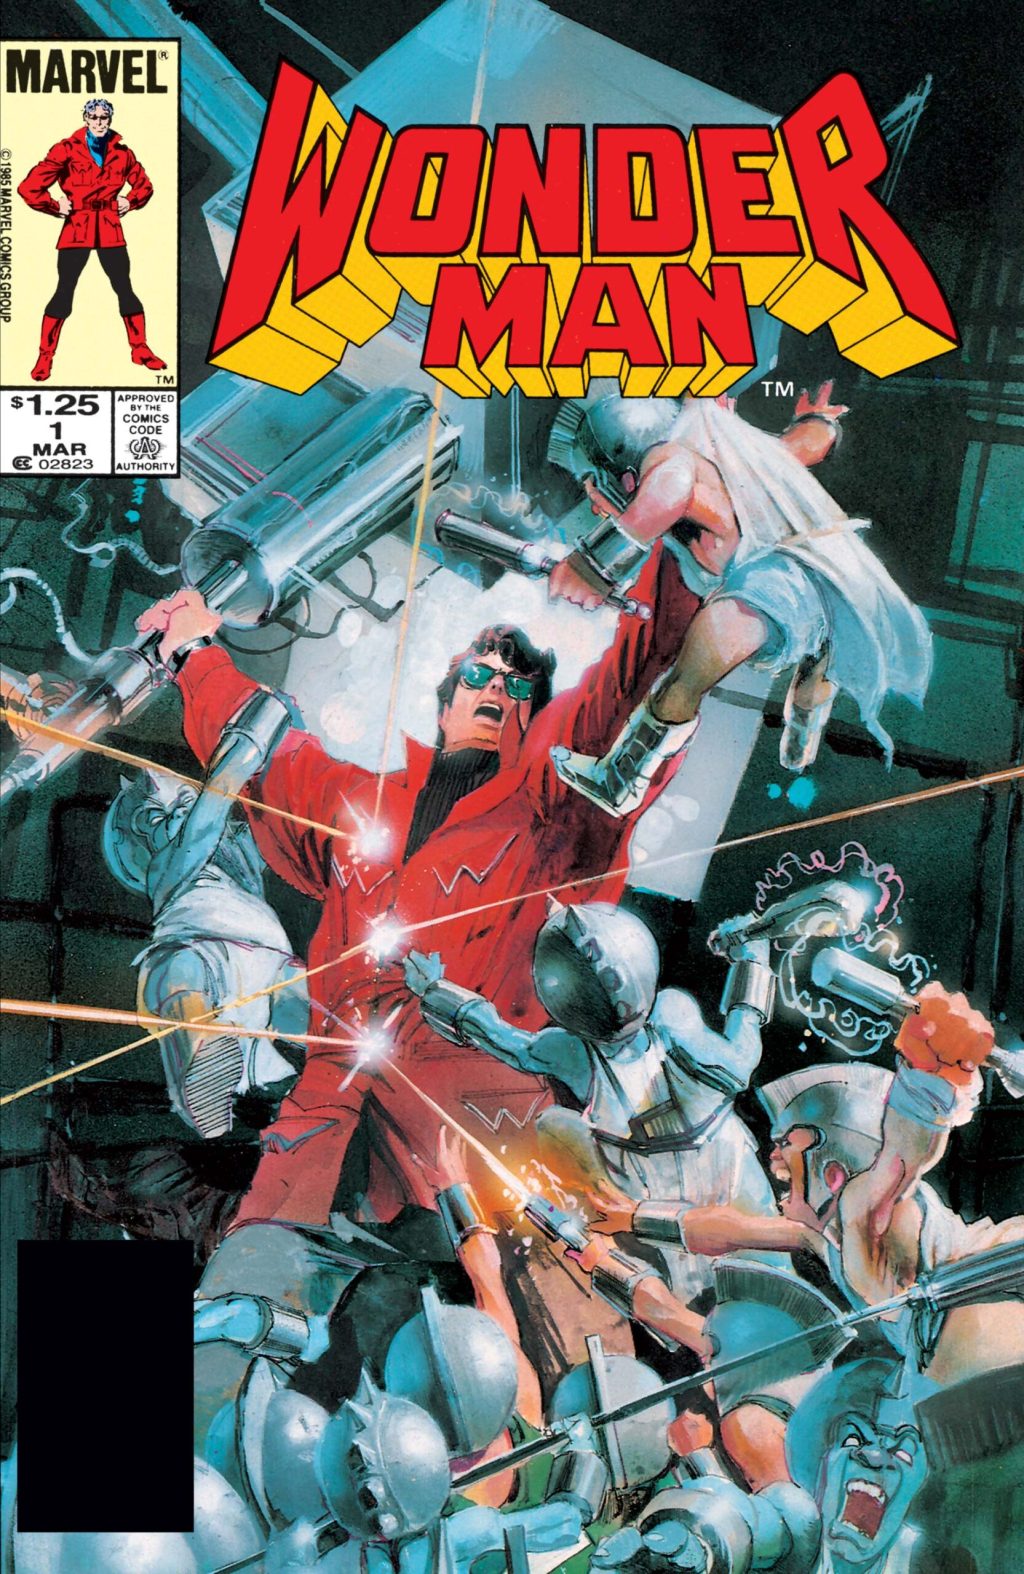 Wonder Man takes on the forces of Cordo, Inc. on Bill Sienkiewicz's cover to Wonder Man Vol. 1 #1 "Wonder Man" (1985), Marvel Comics